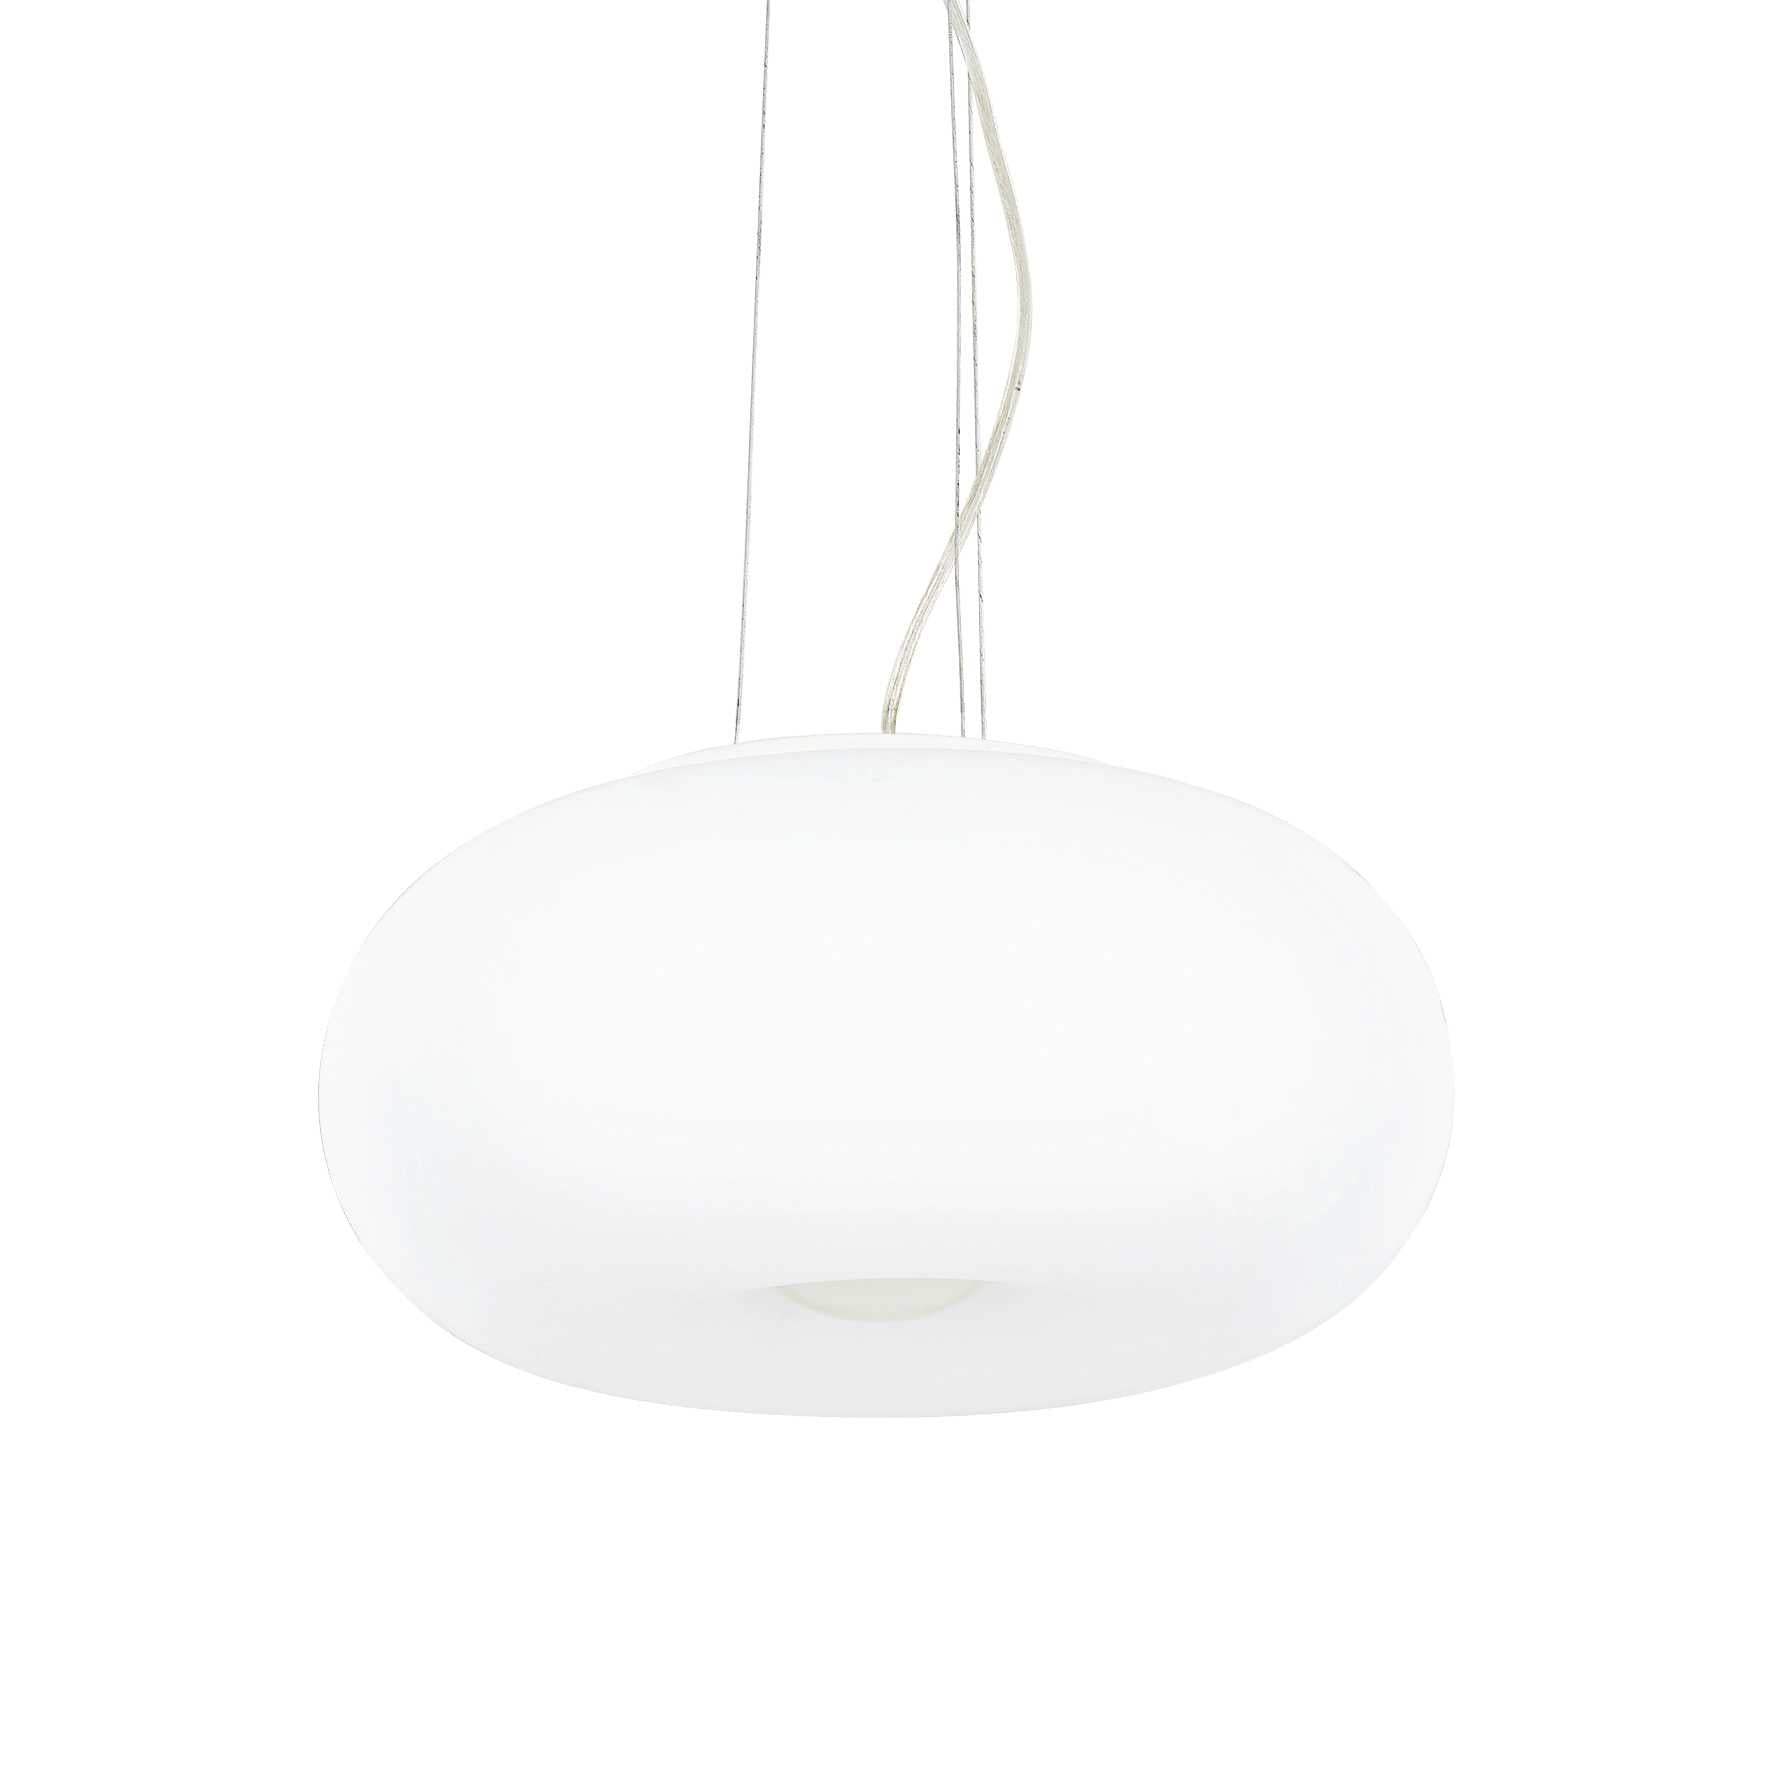 Ulisse Hanging Shade Light - White Finish - Cusack Lighting